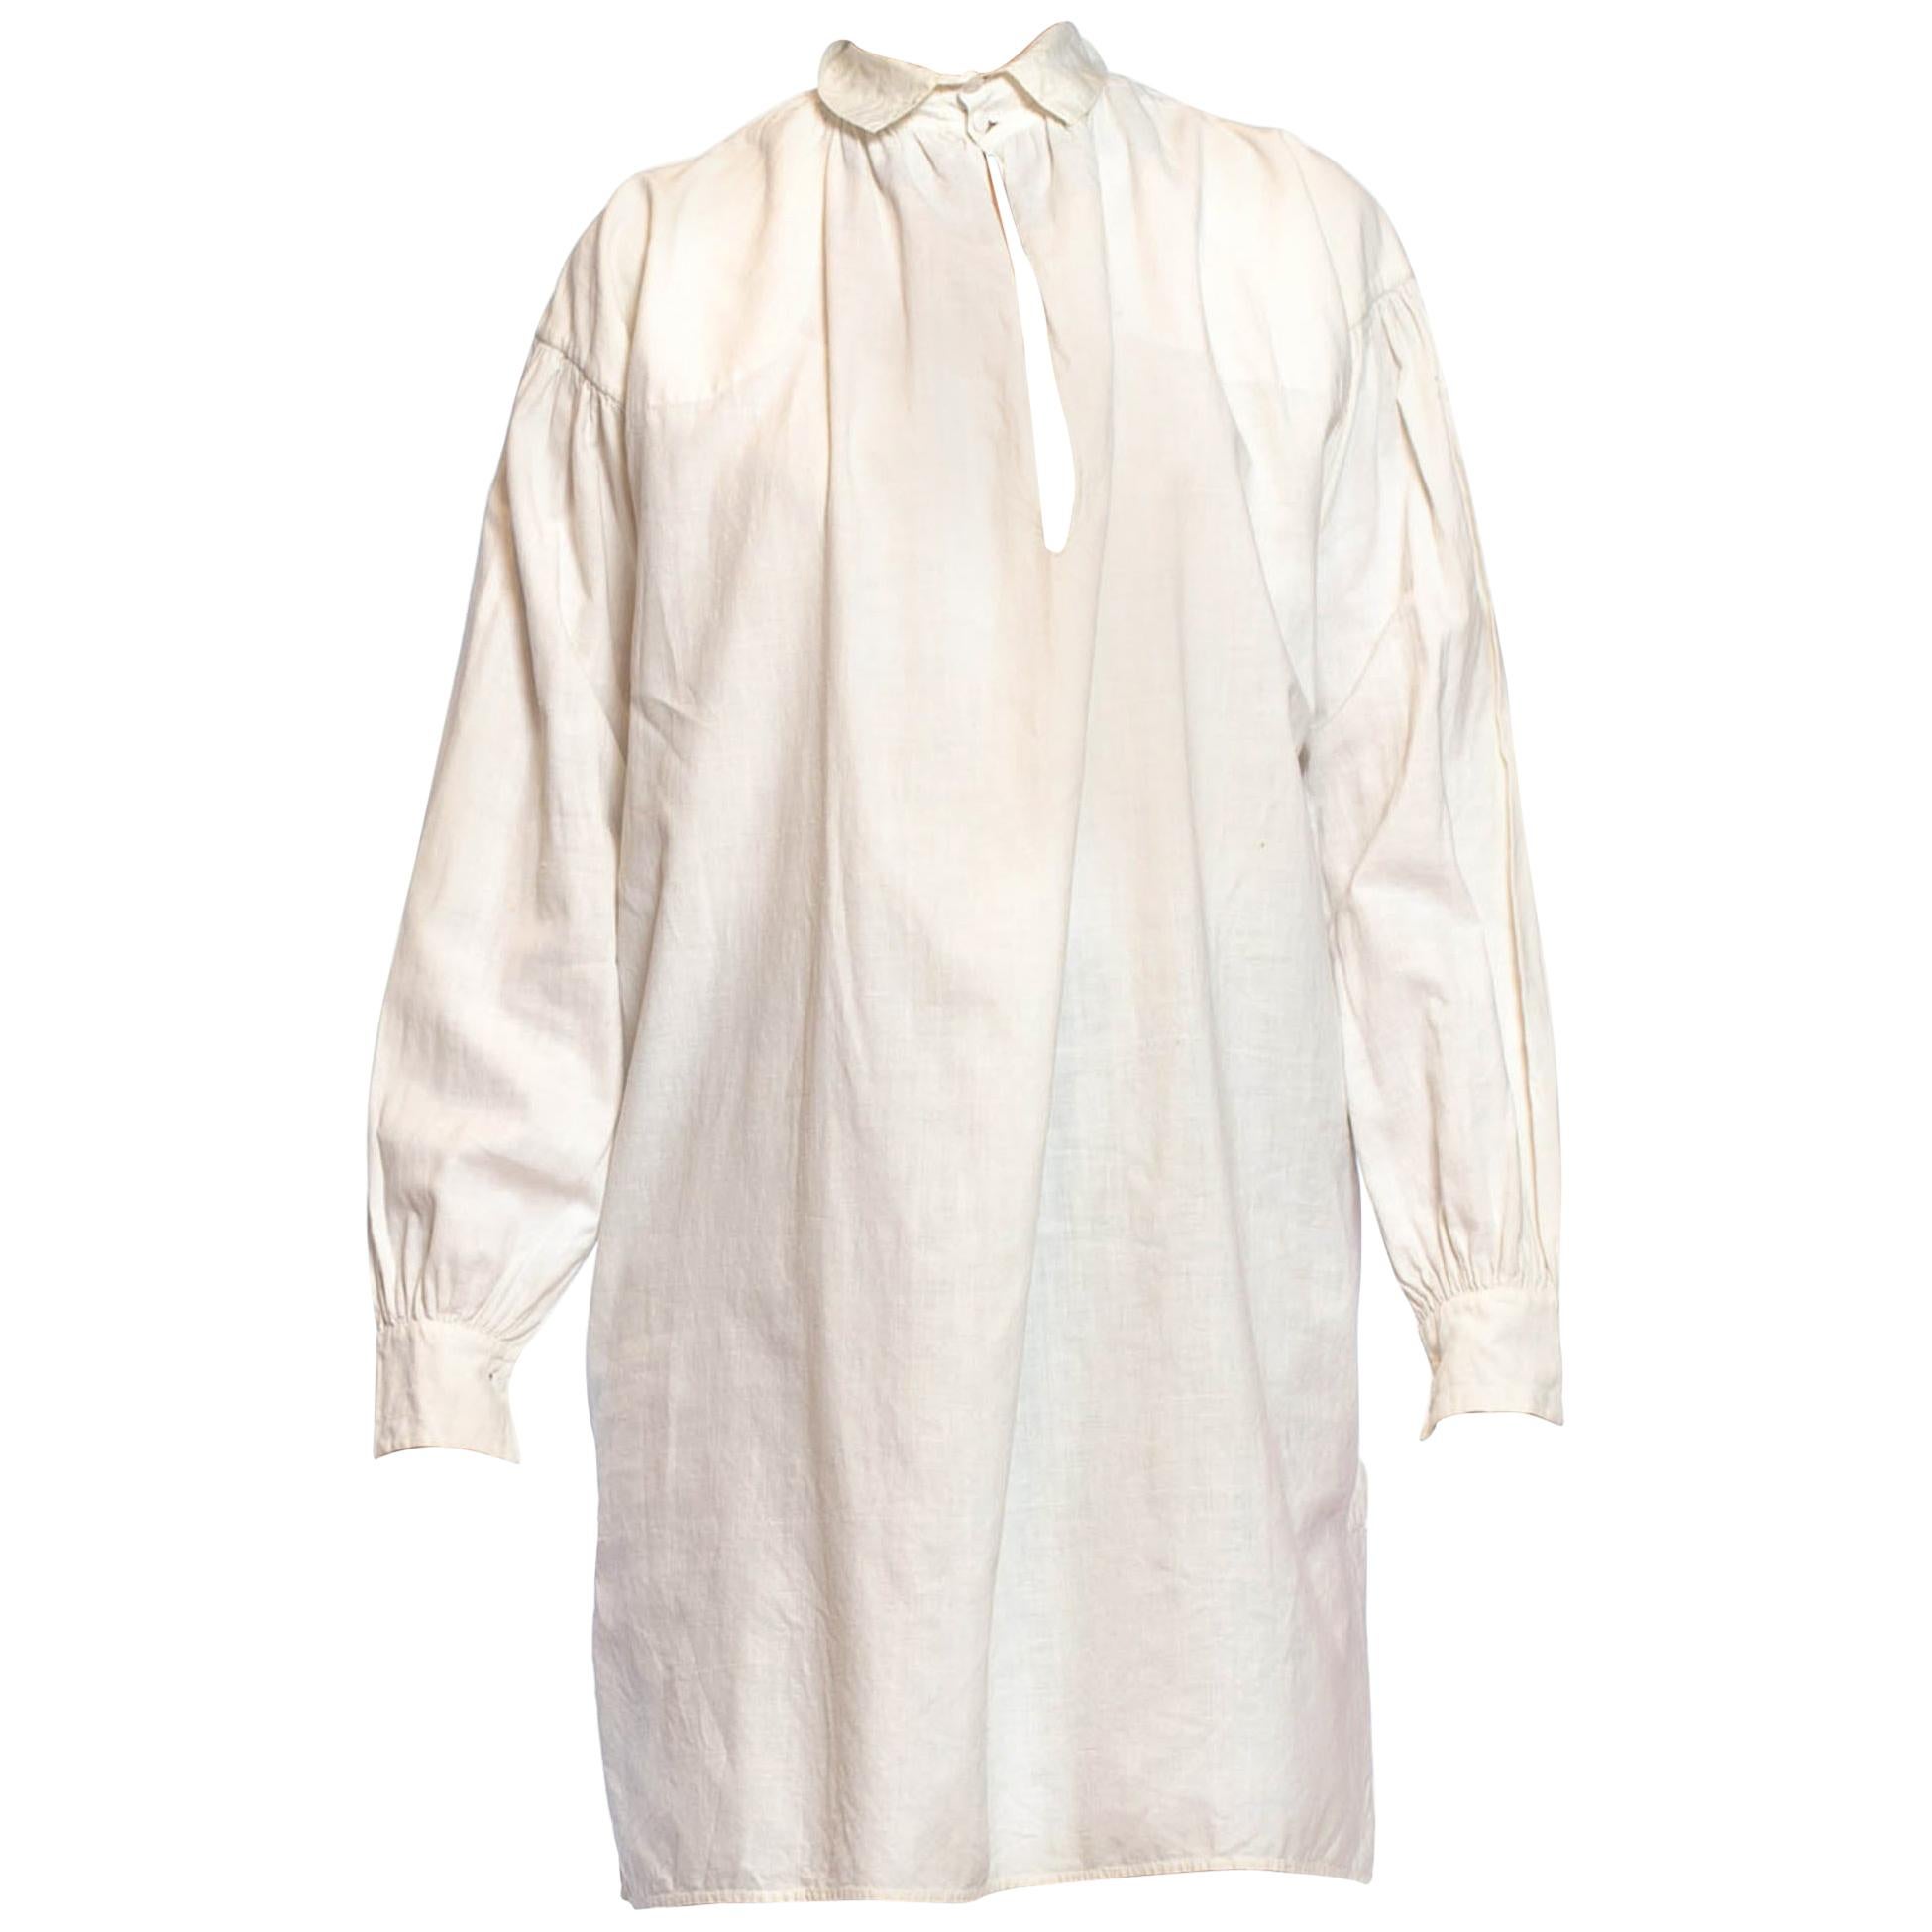 Victorian Ivory Linen & Cotton Men's Shirt From 1810-1830